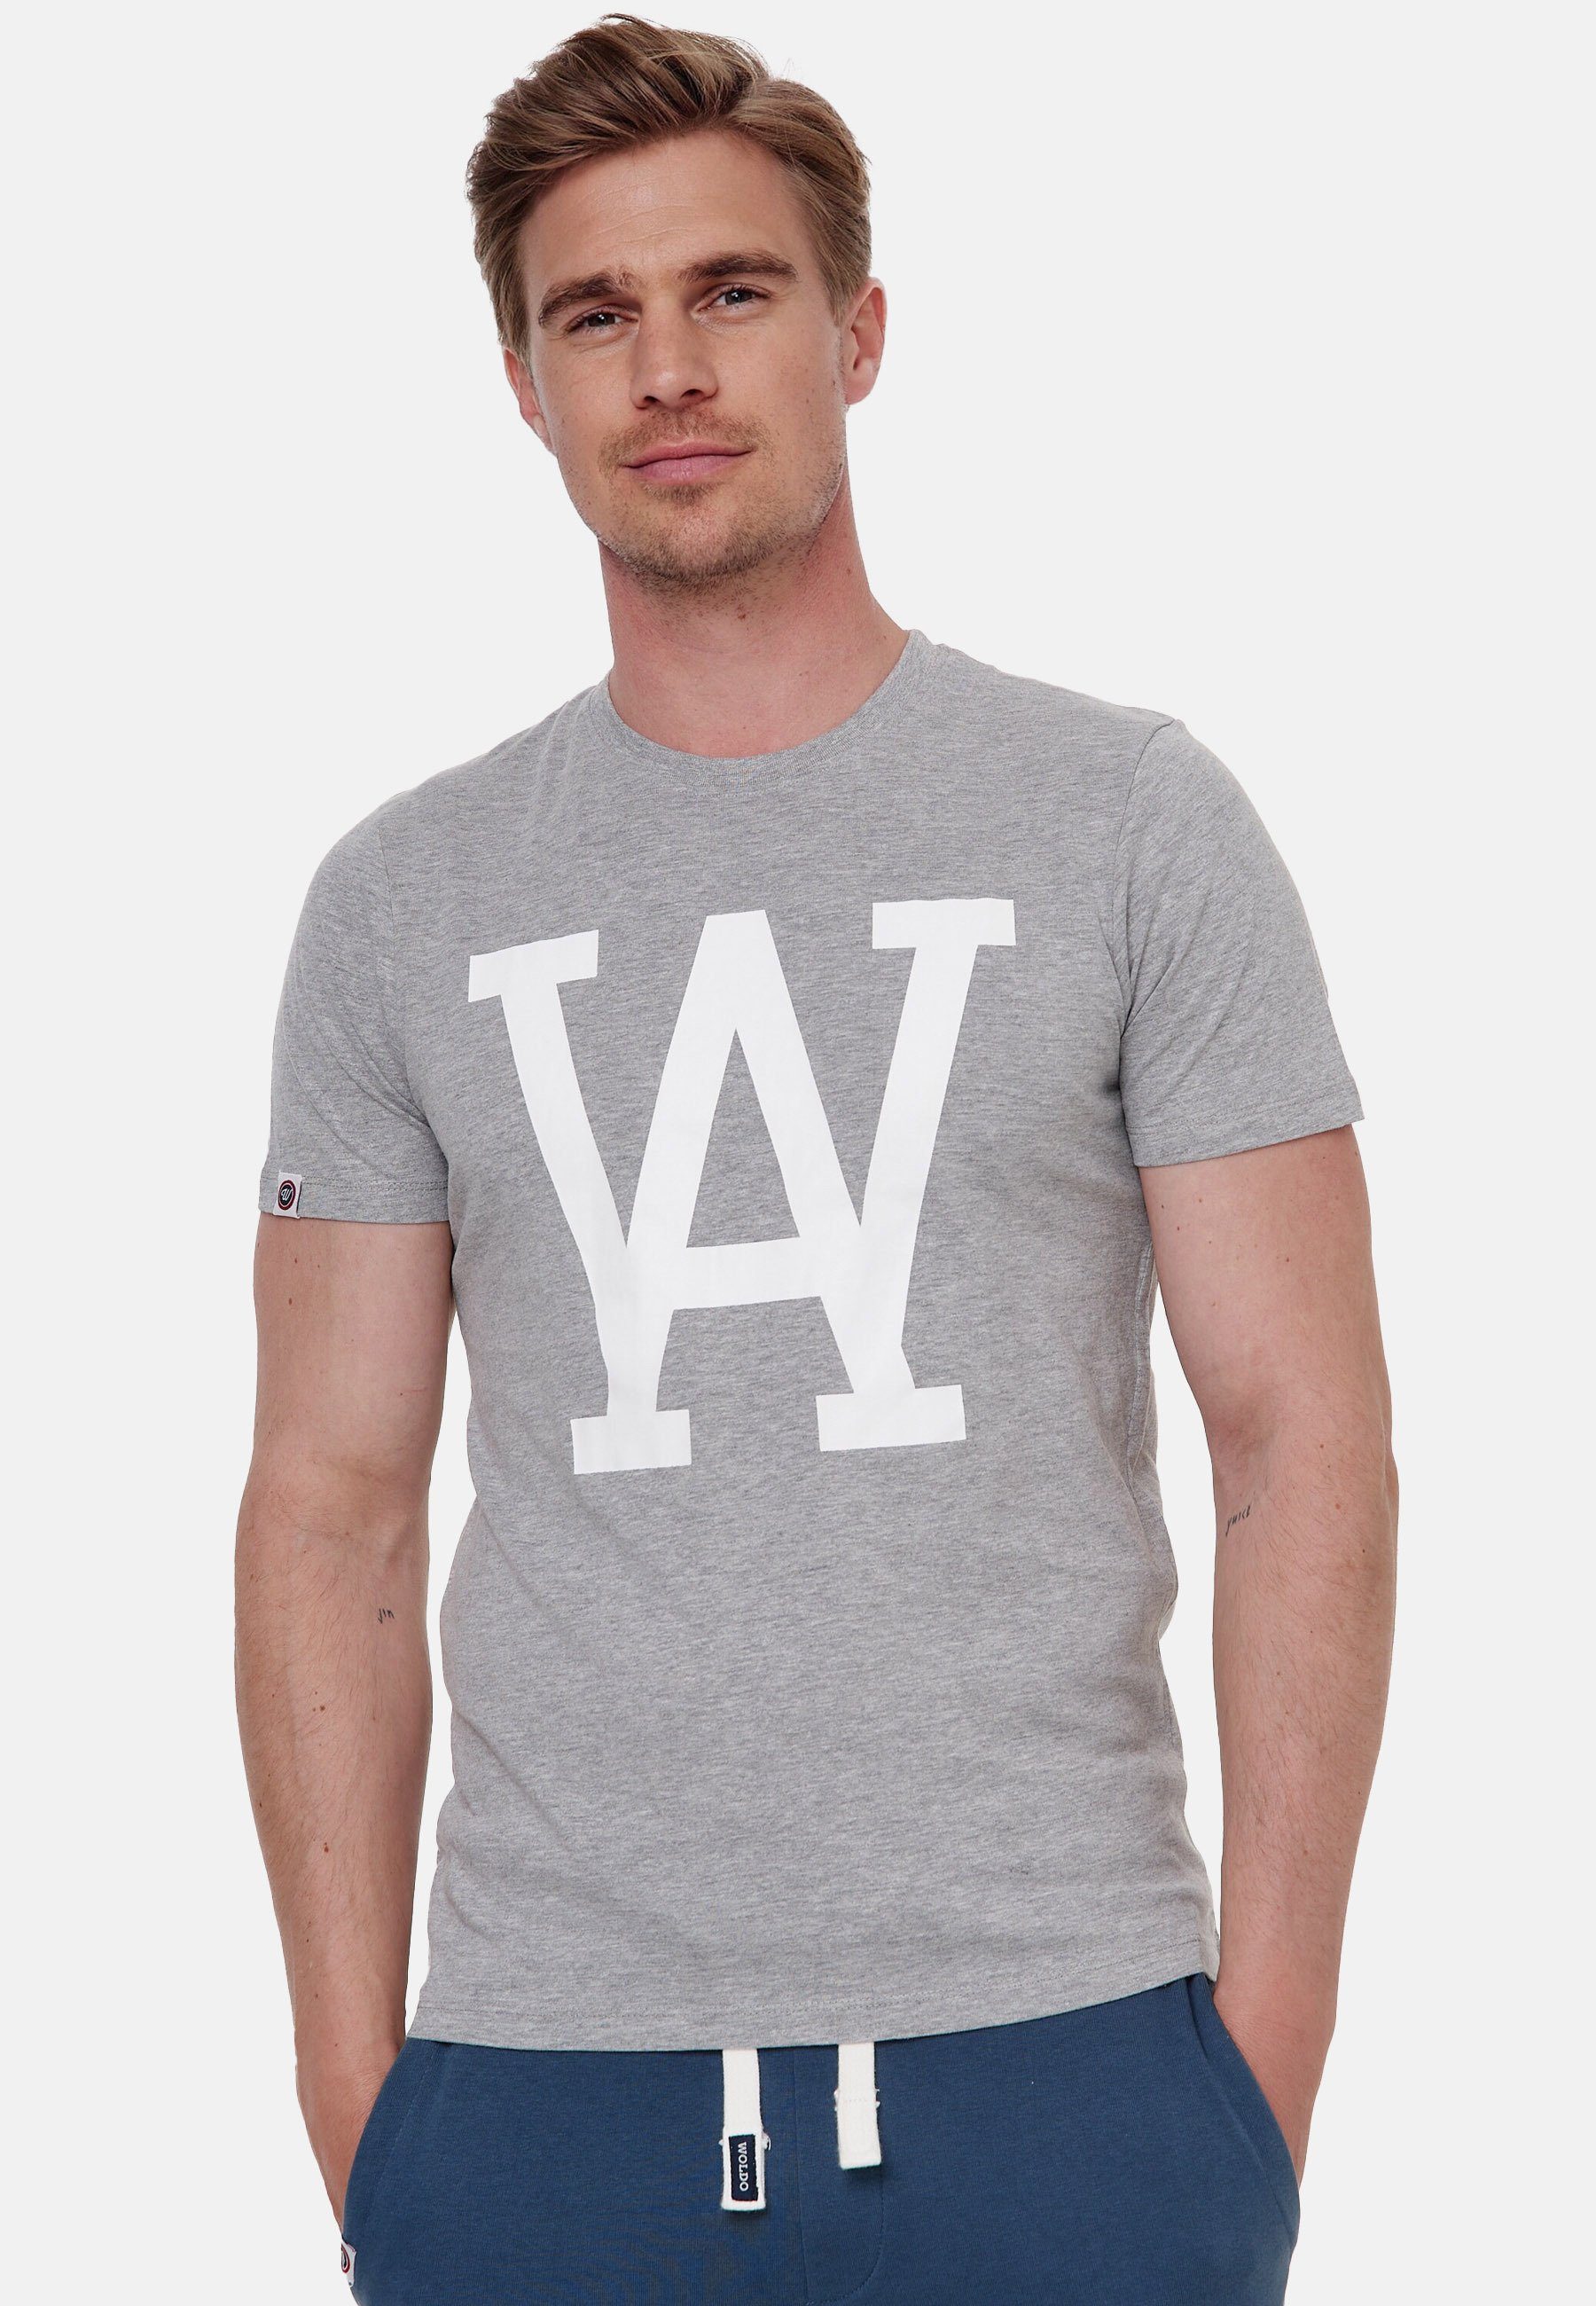 Woldo Athletic T-Shirt T-Shirt Big WA grau-weiß